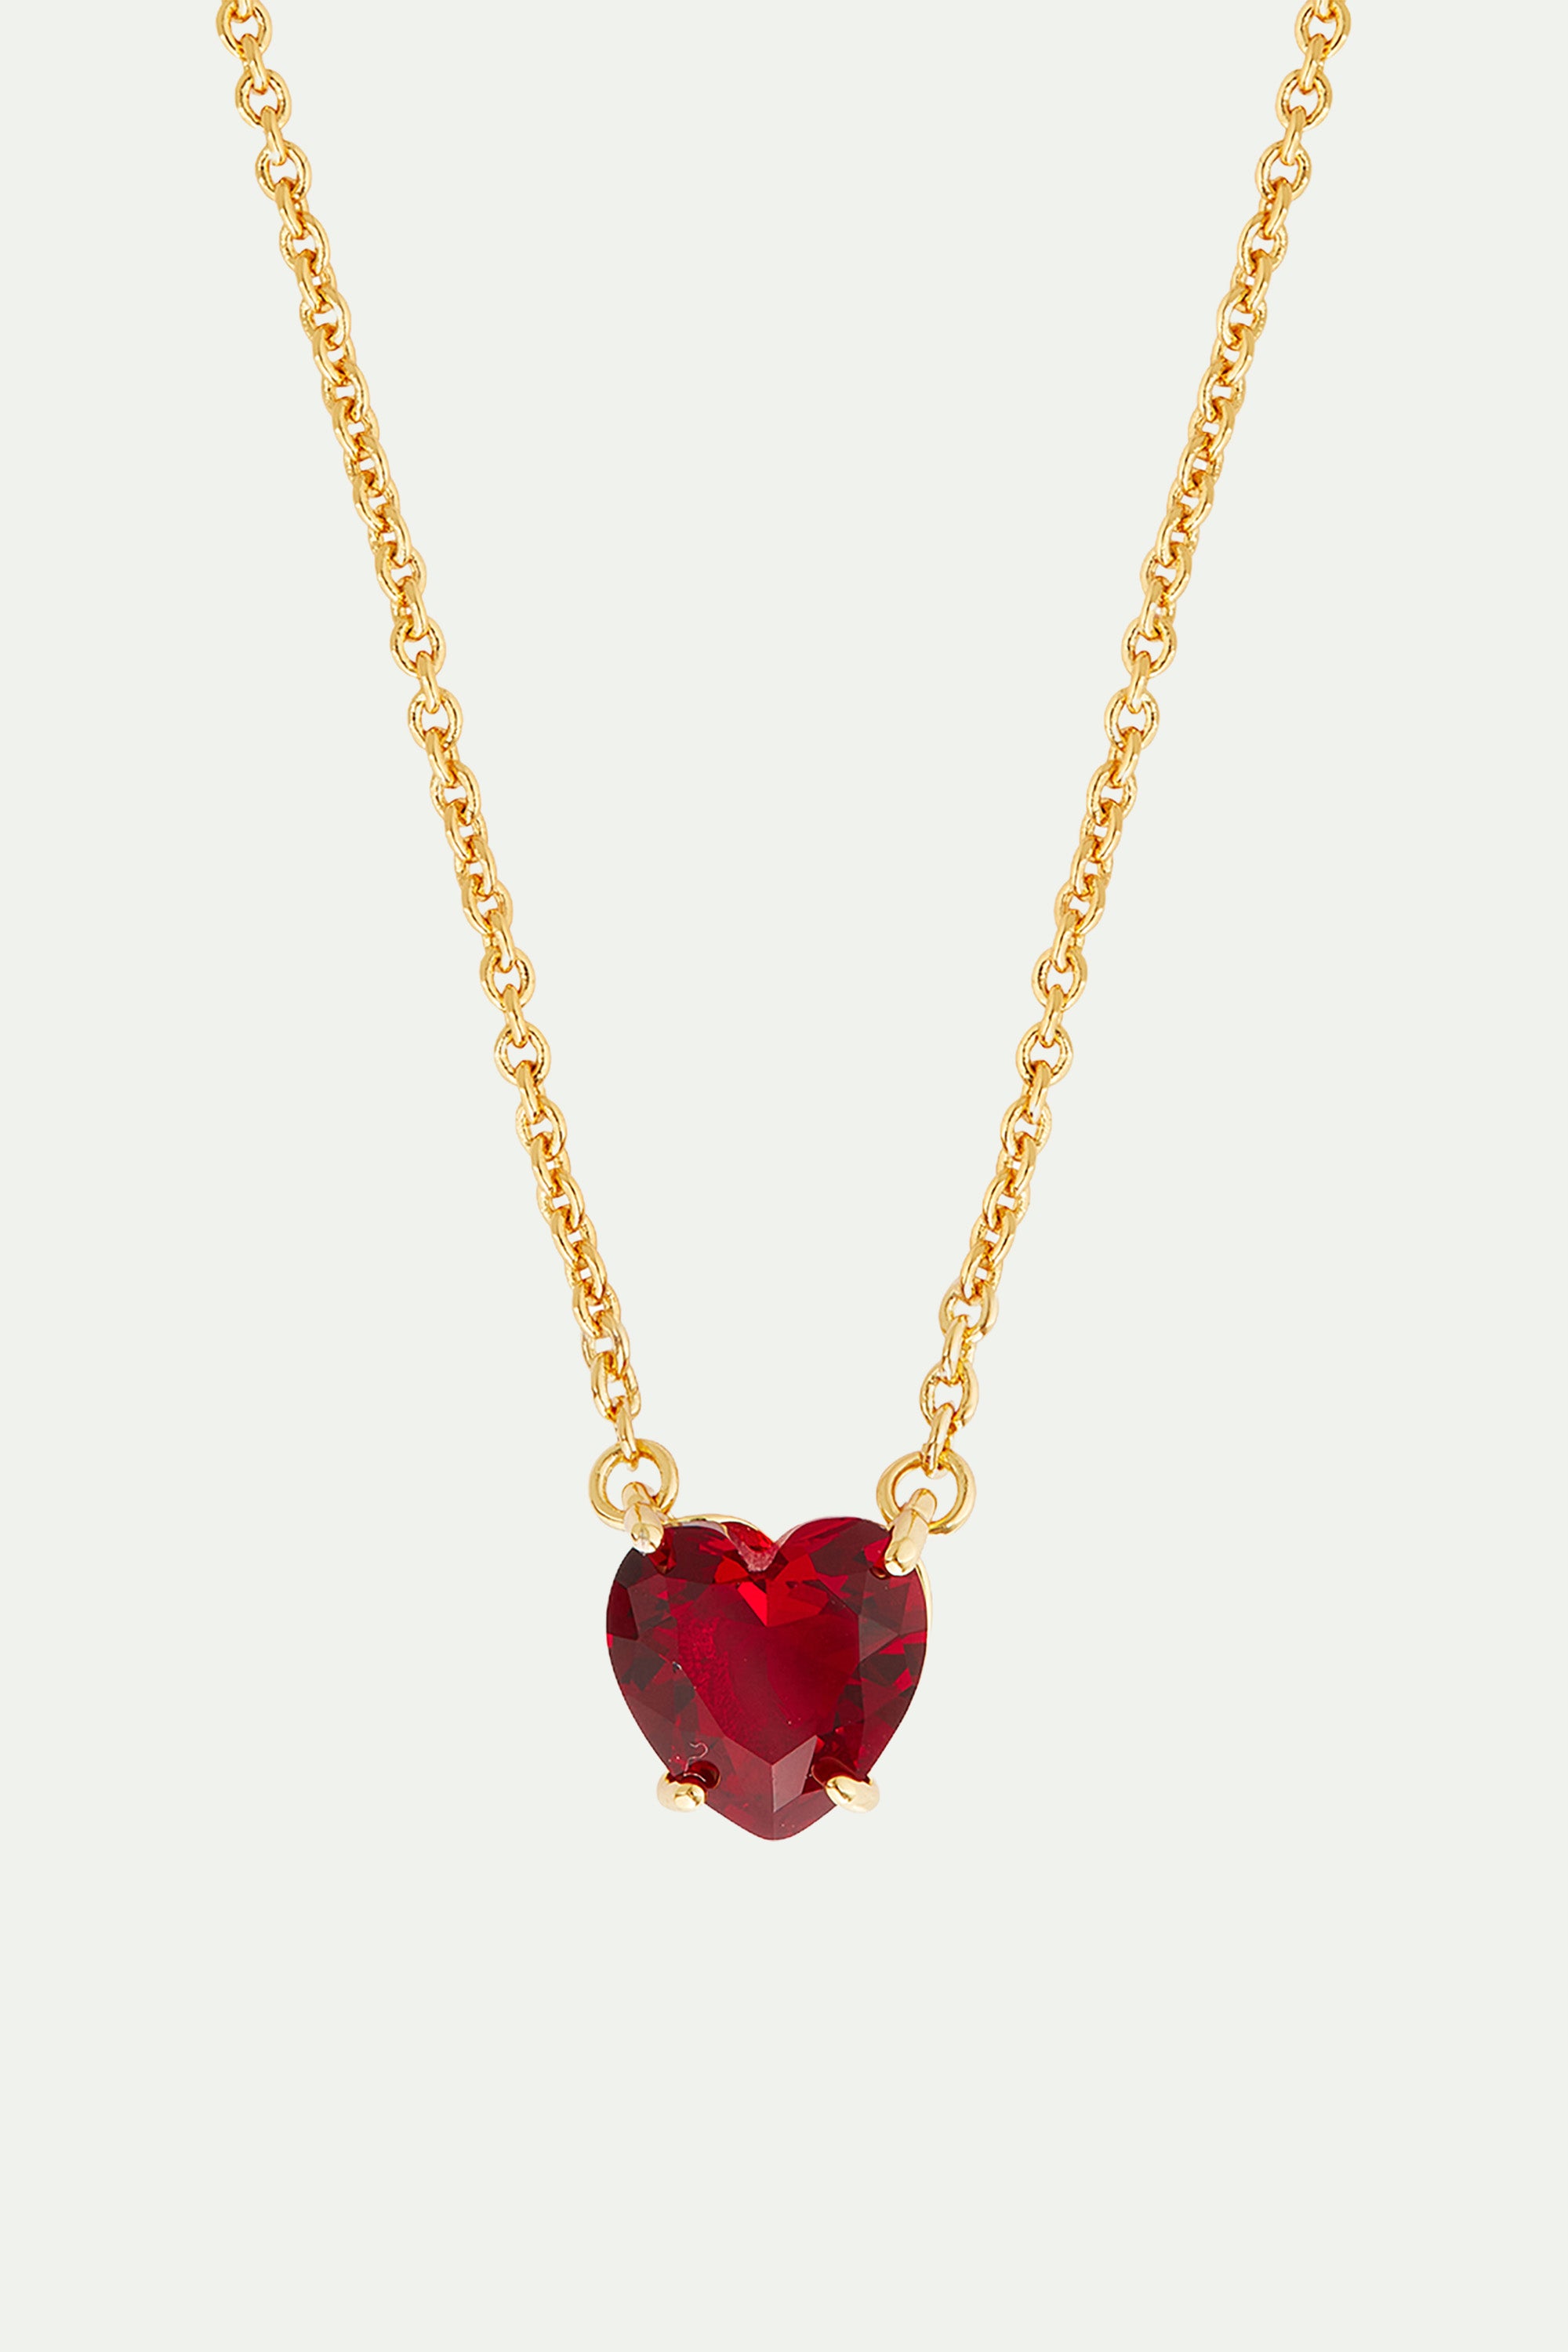 Collier pendentif cœur La Diamantine rouge grenat